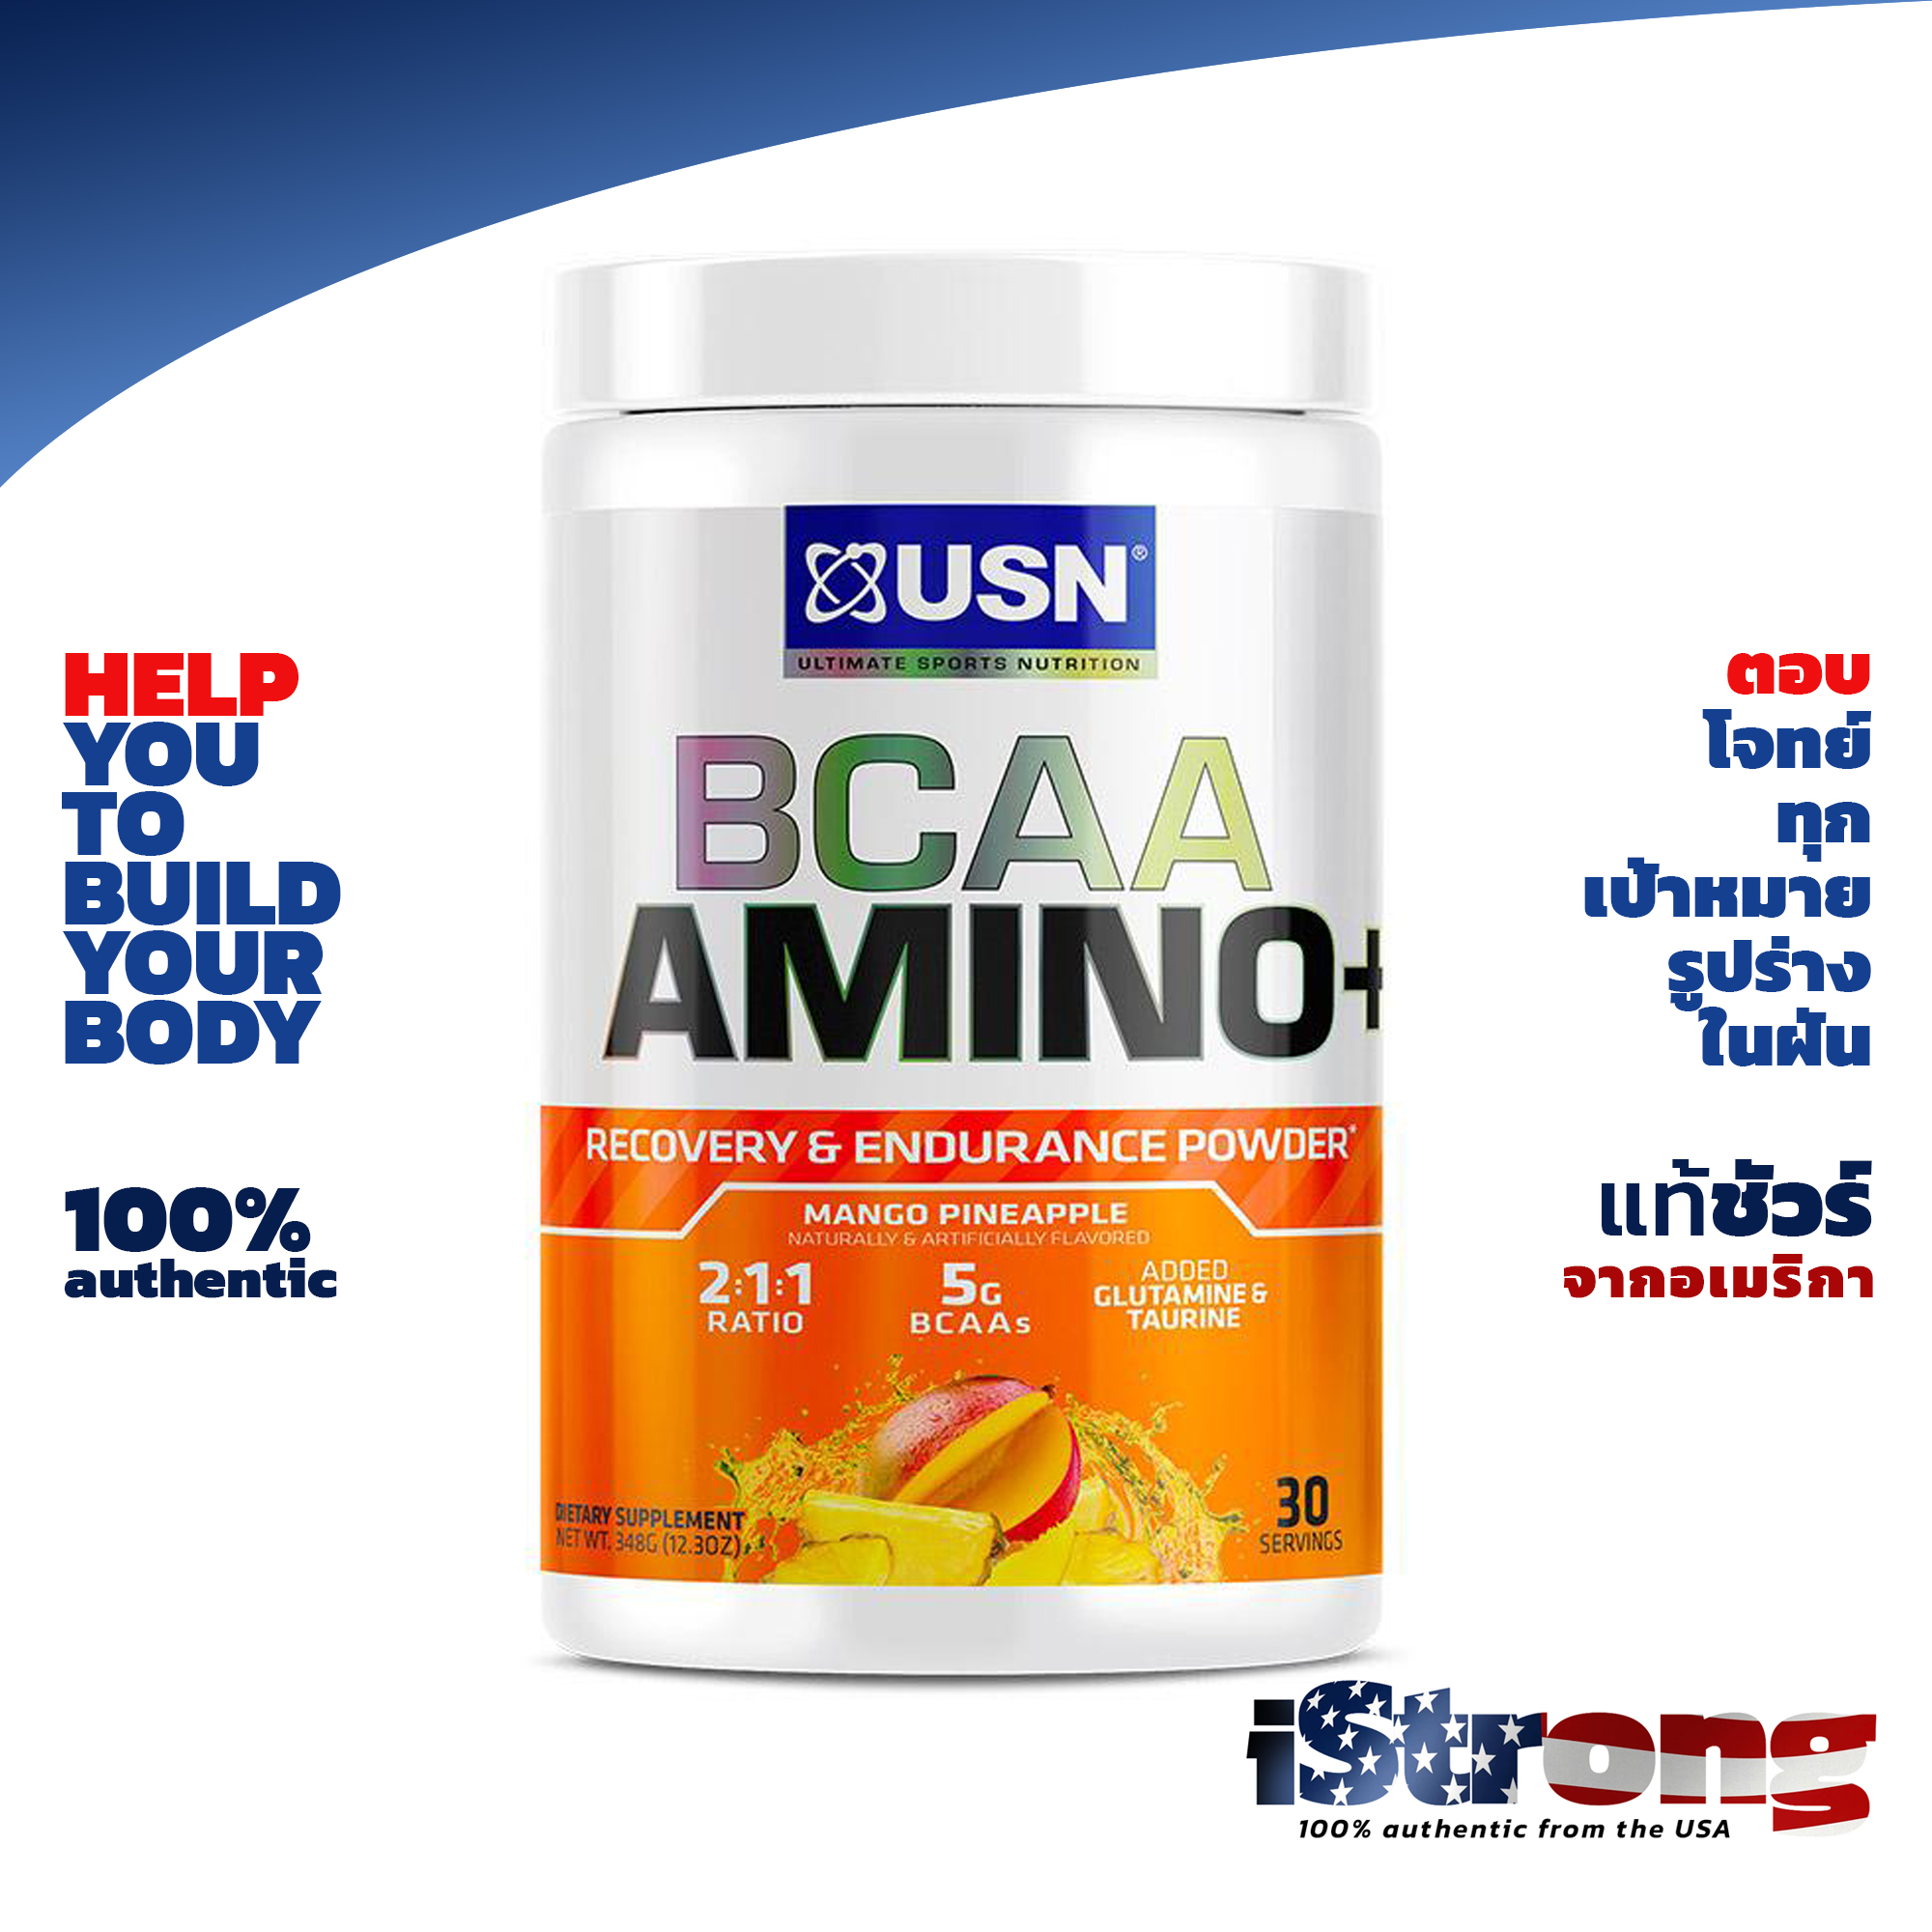 USN : BCAA Amino+ 30 servings : Enhance Performance, Stamina & Recovery! รวมบีซีเอเอ และอะมิโนครบครัน เพื่อการฟื้นฟูและเสริมสร้างกล้ามเนื้อ